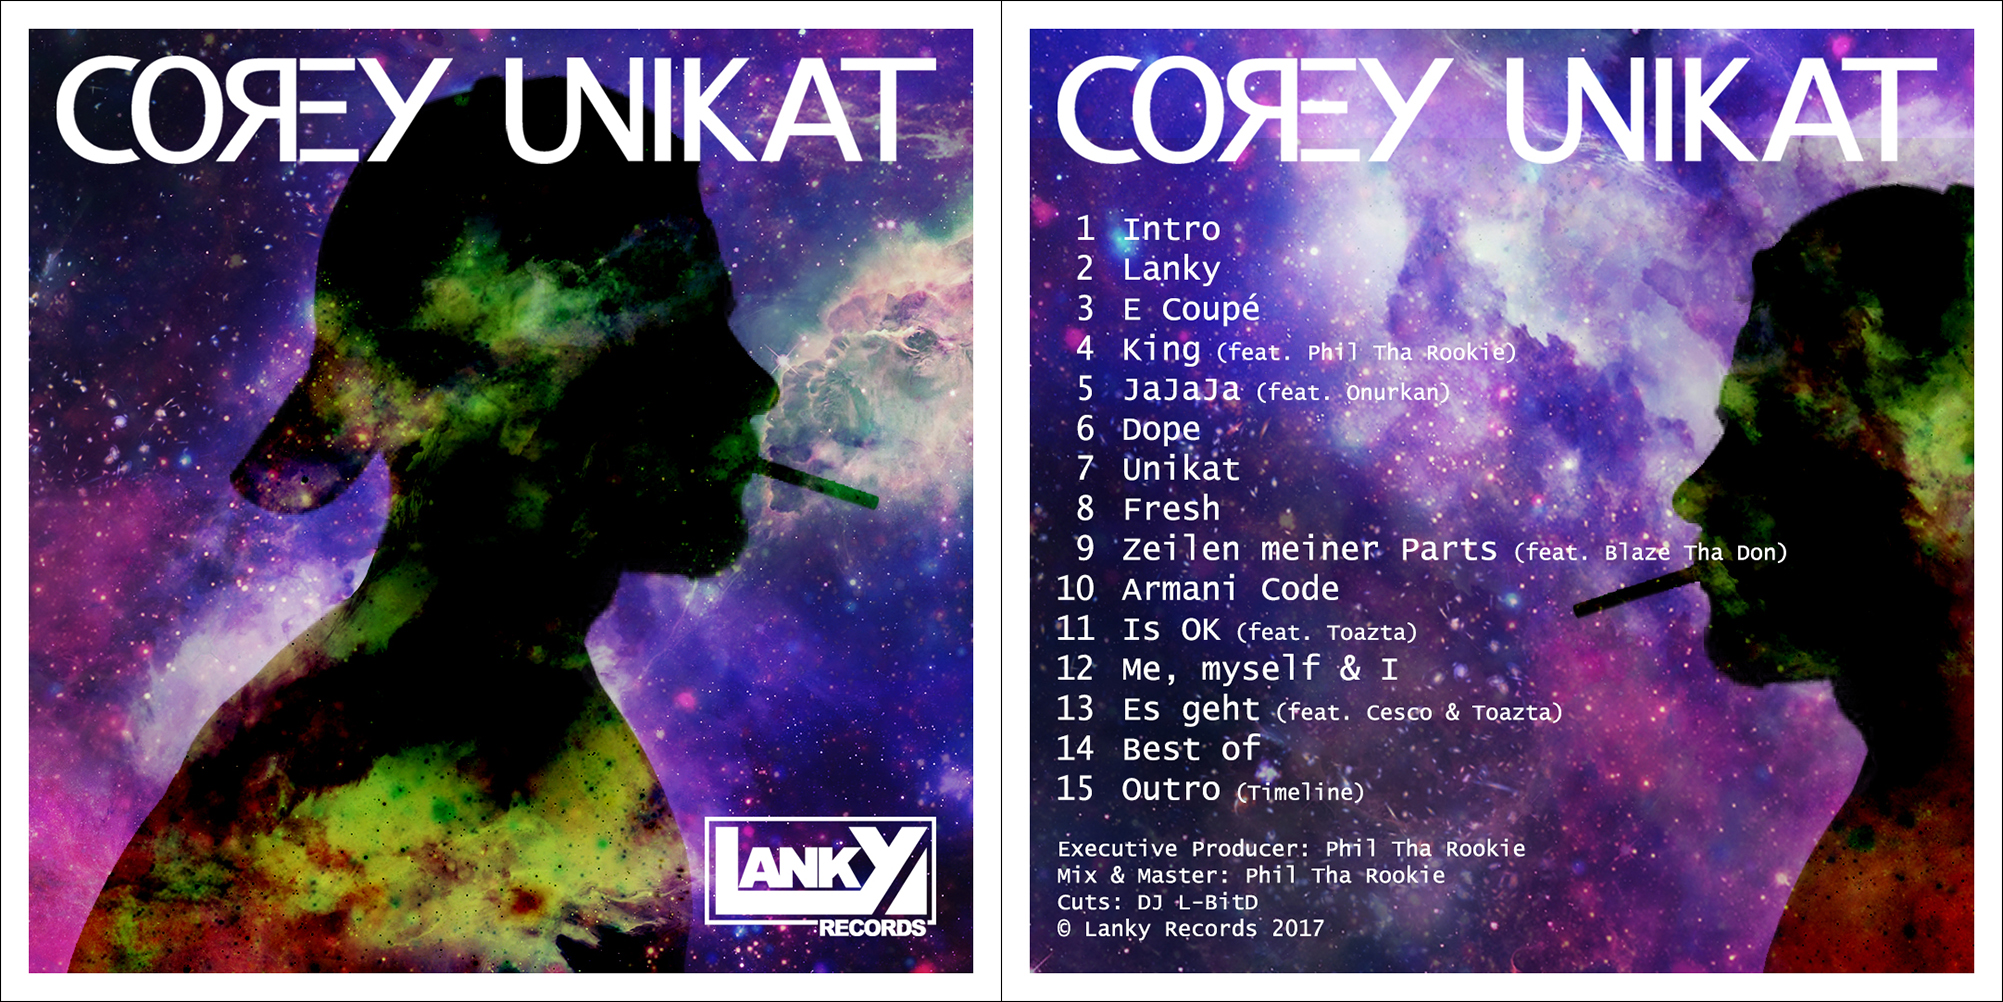 Corey - Unikat Cover